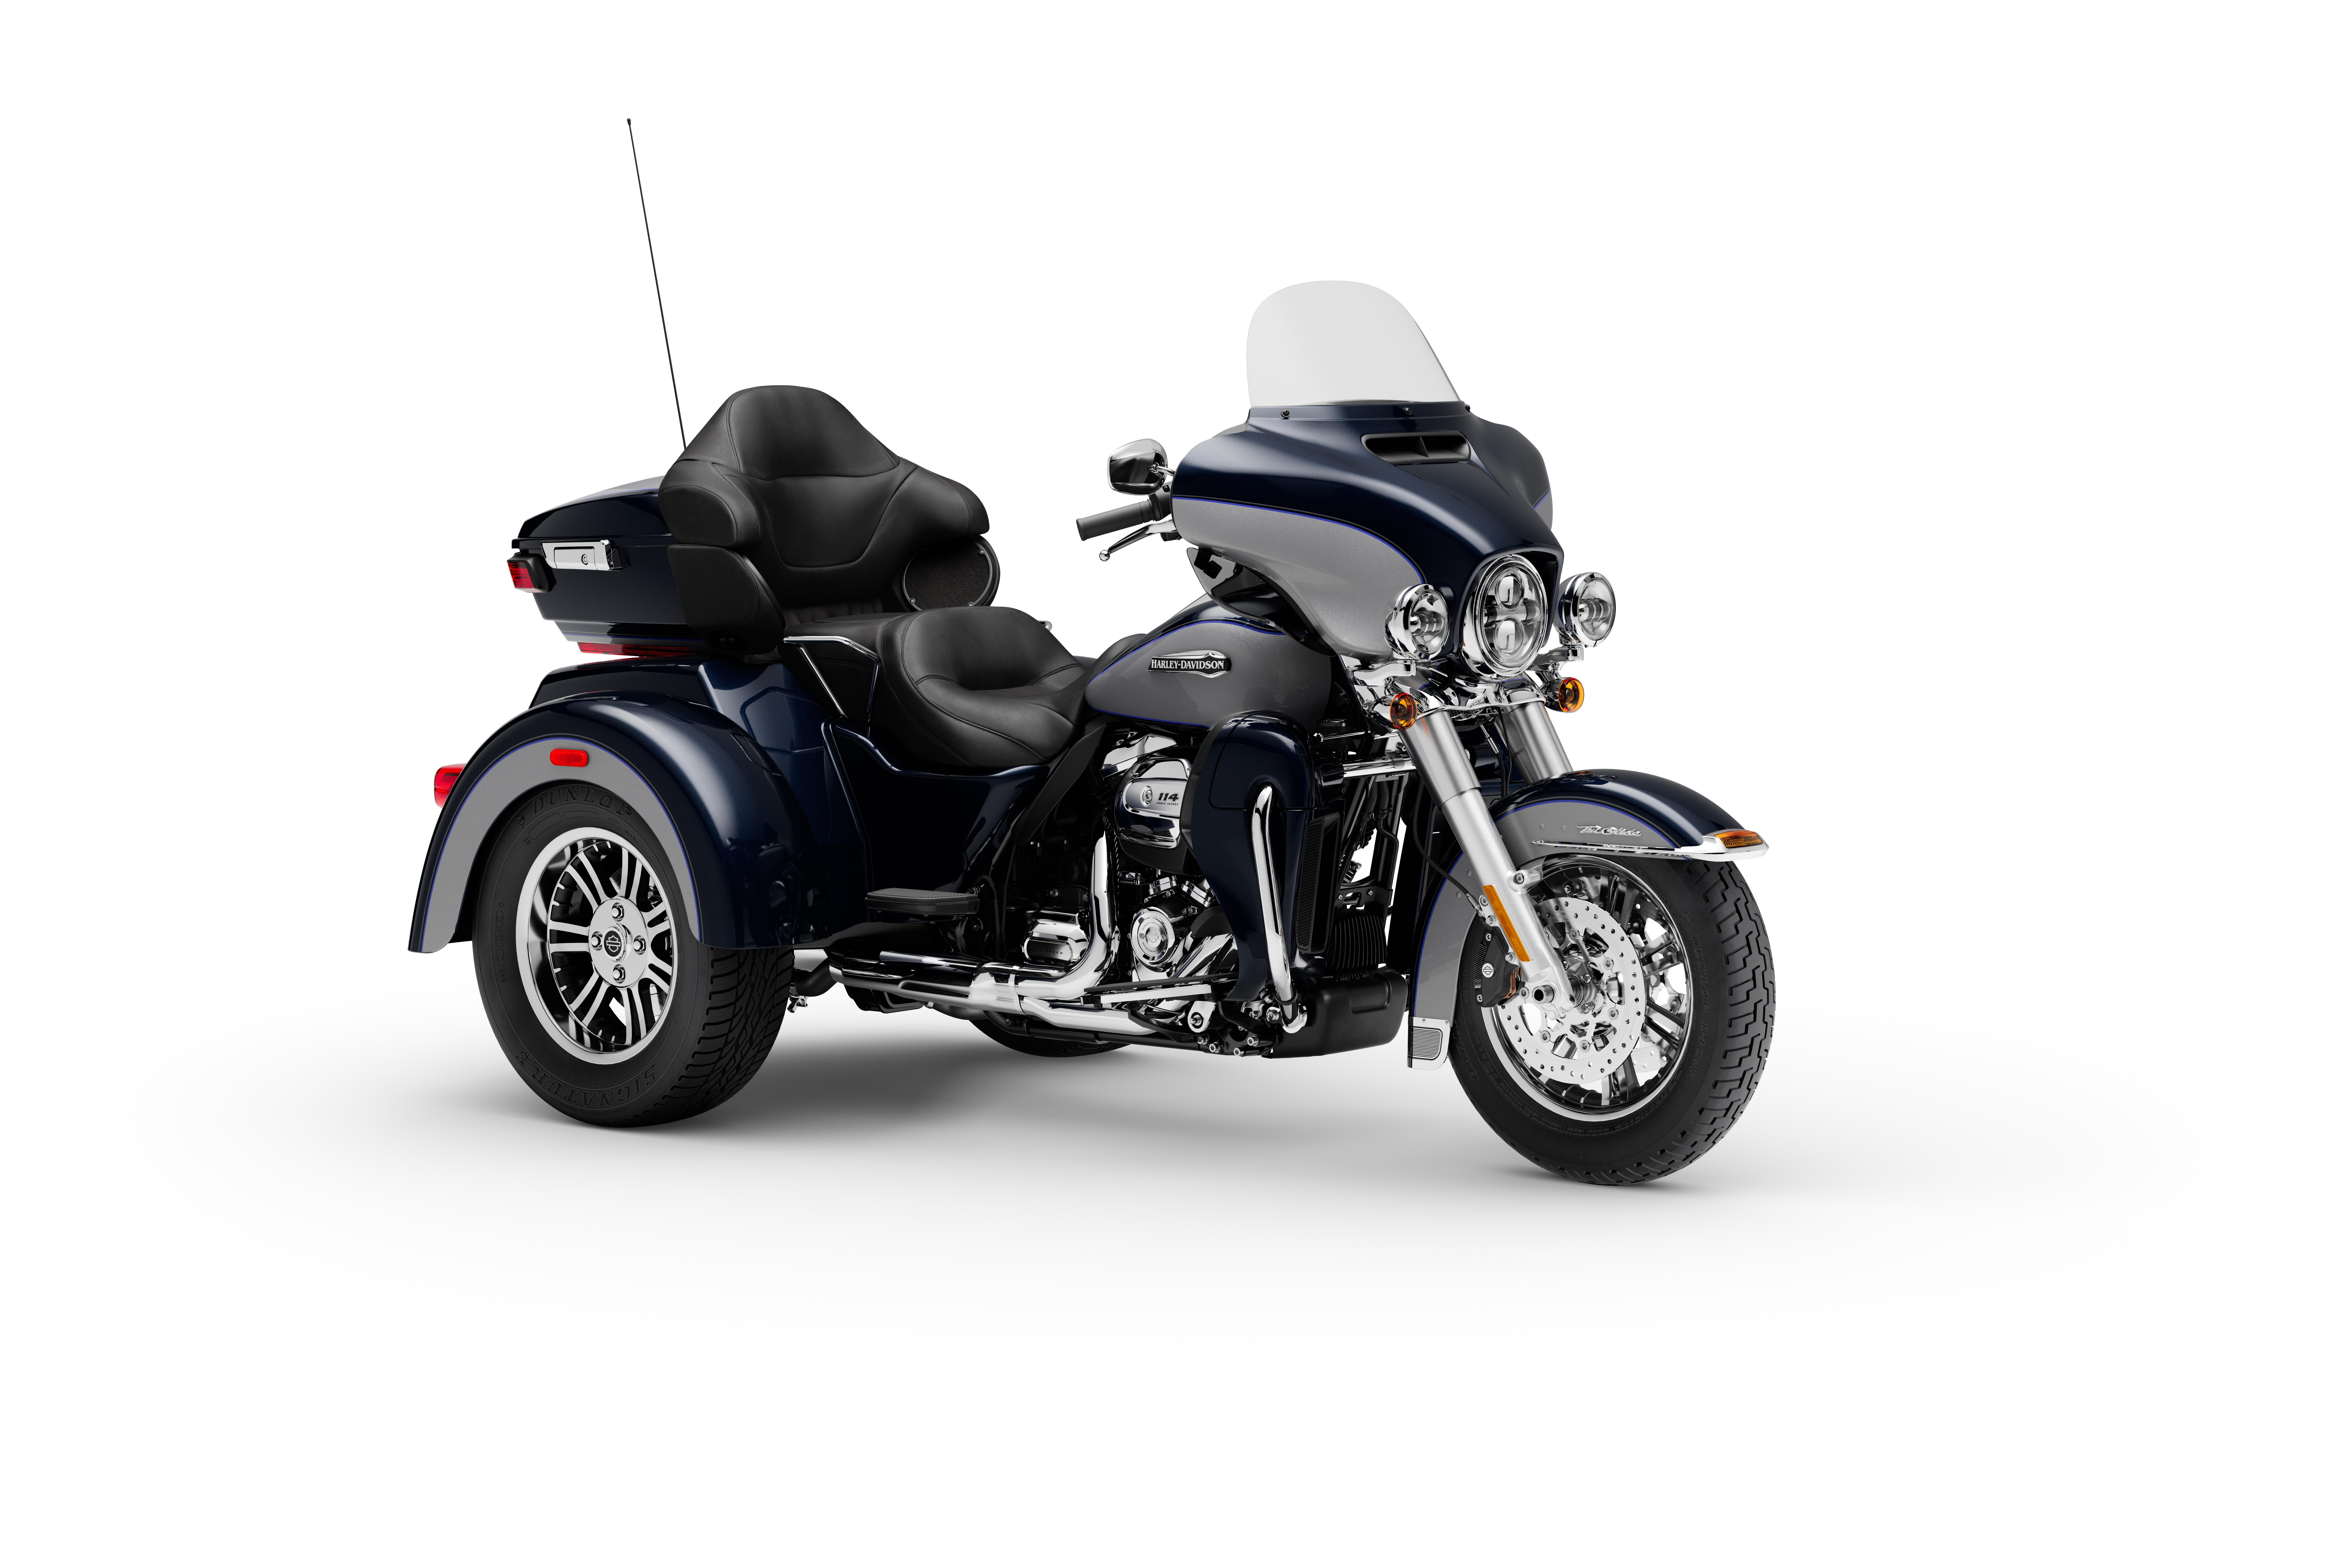 2020 Harley-Davidson Tri Glide Ultra Buyer's Guide: Specs, Photos, Price